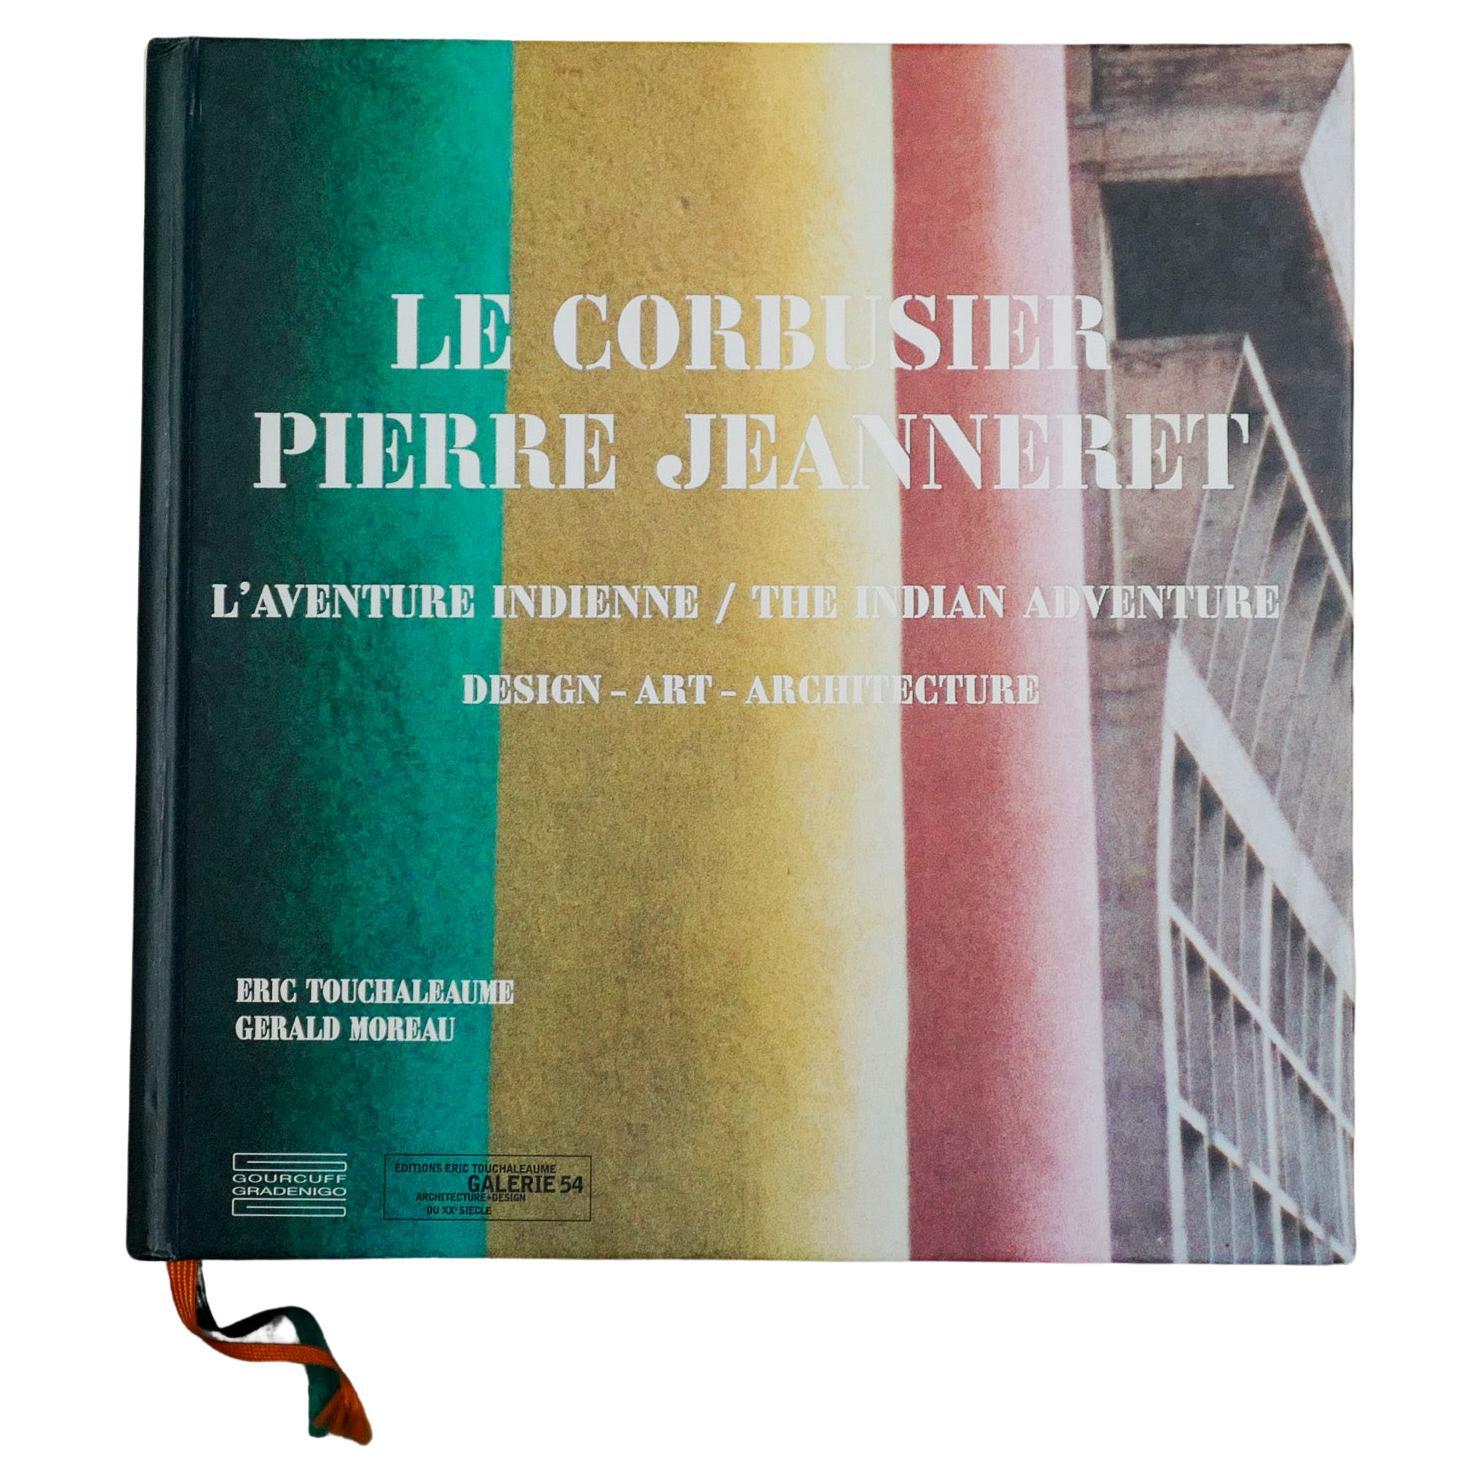 Pierre Jeanneret / Le Corbusier "The Indian Adventure" Buch über Chandigarh